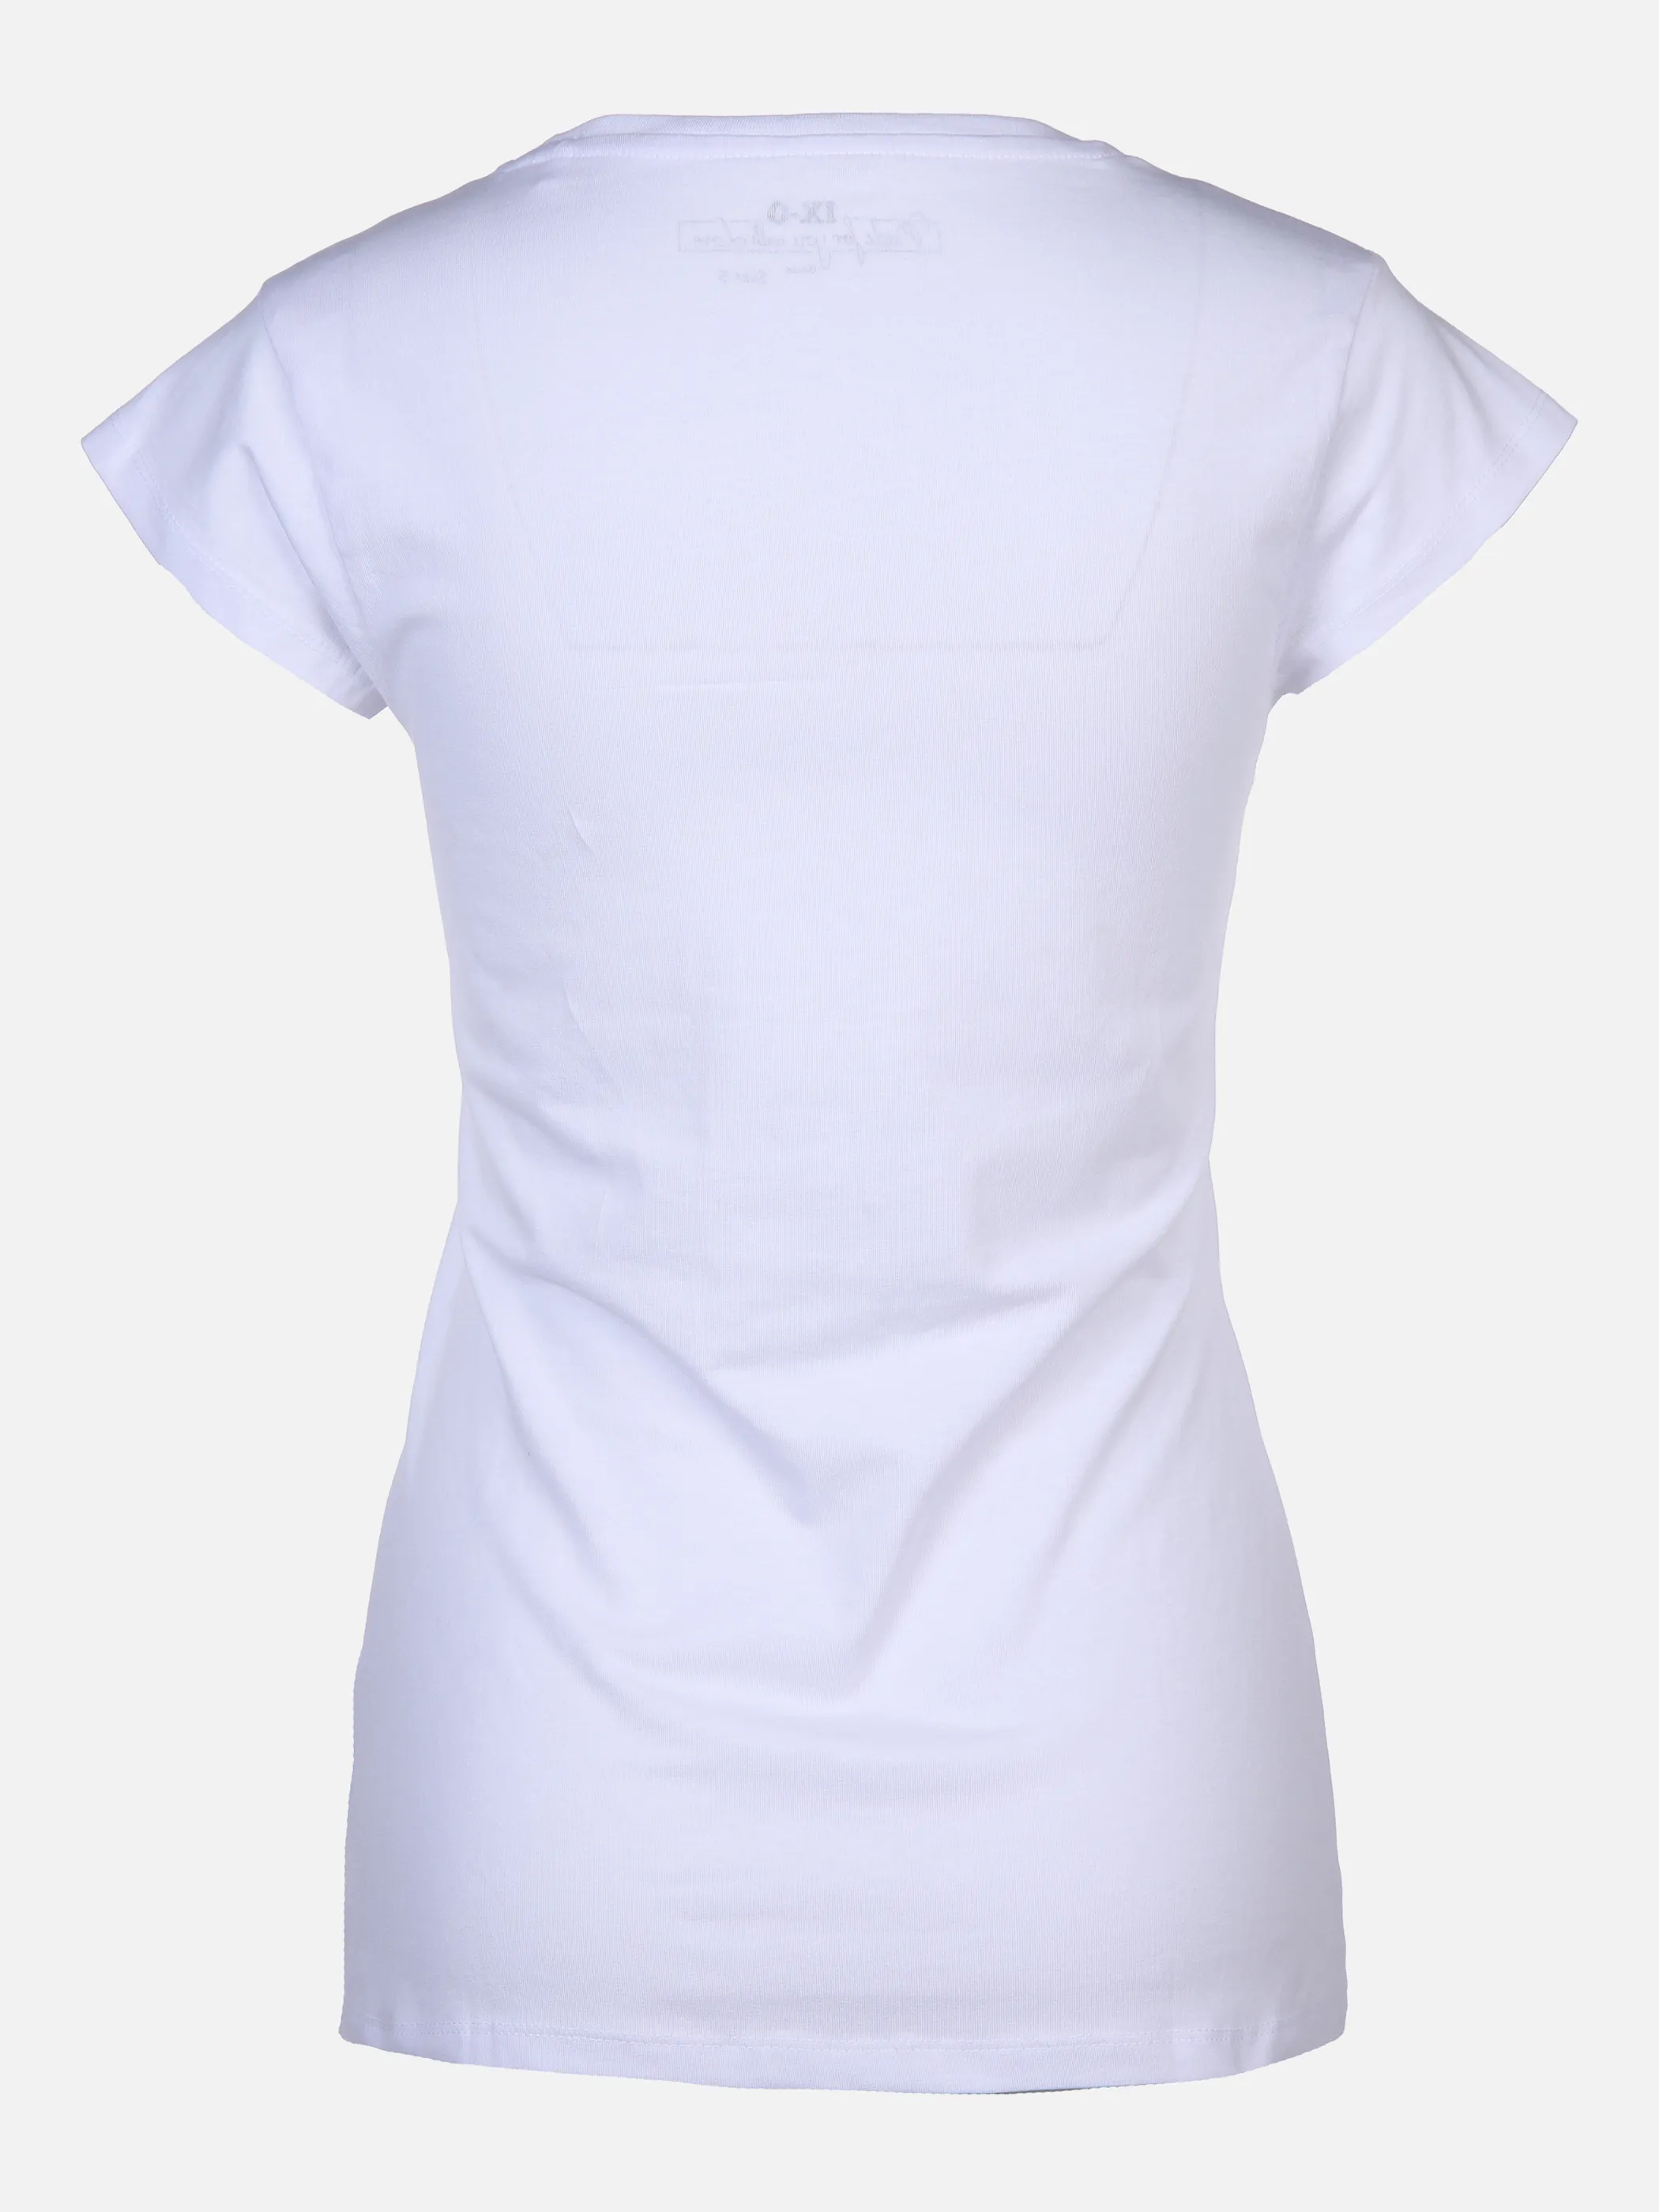 IX-O YF-Da- T-Shirt 1/2 Basic RH Weiß 804314 WHITE 2